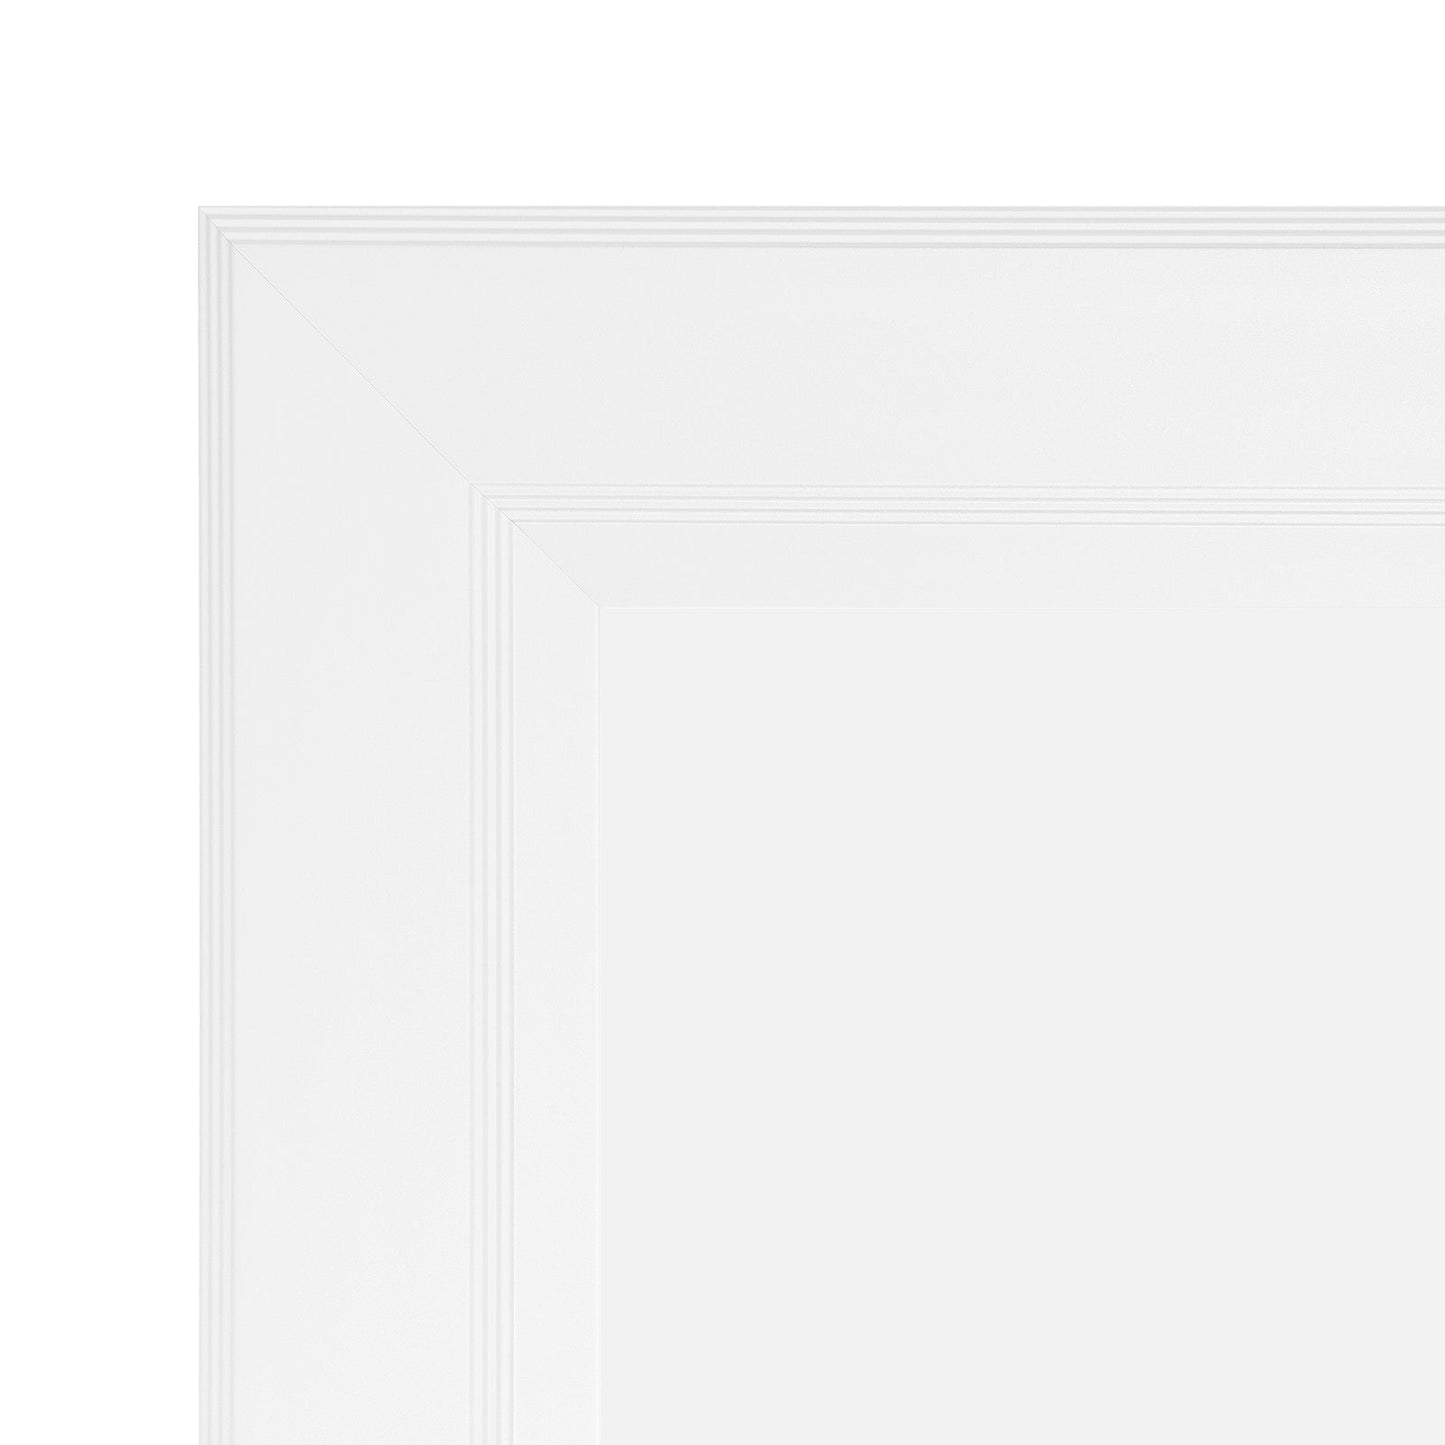 30x40 White SnapeZo® Poster Case - 1.77" Profile - Snap Frames Direct